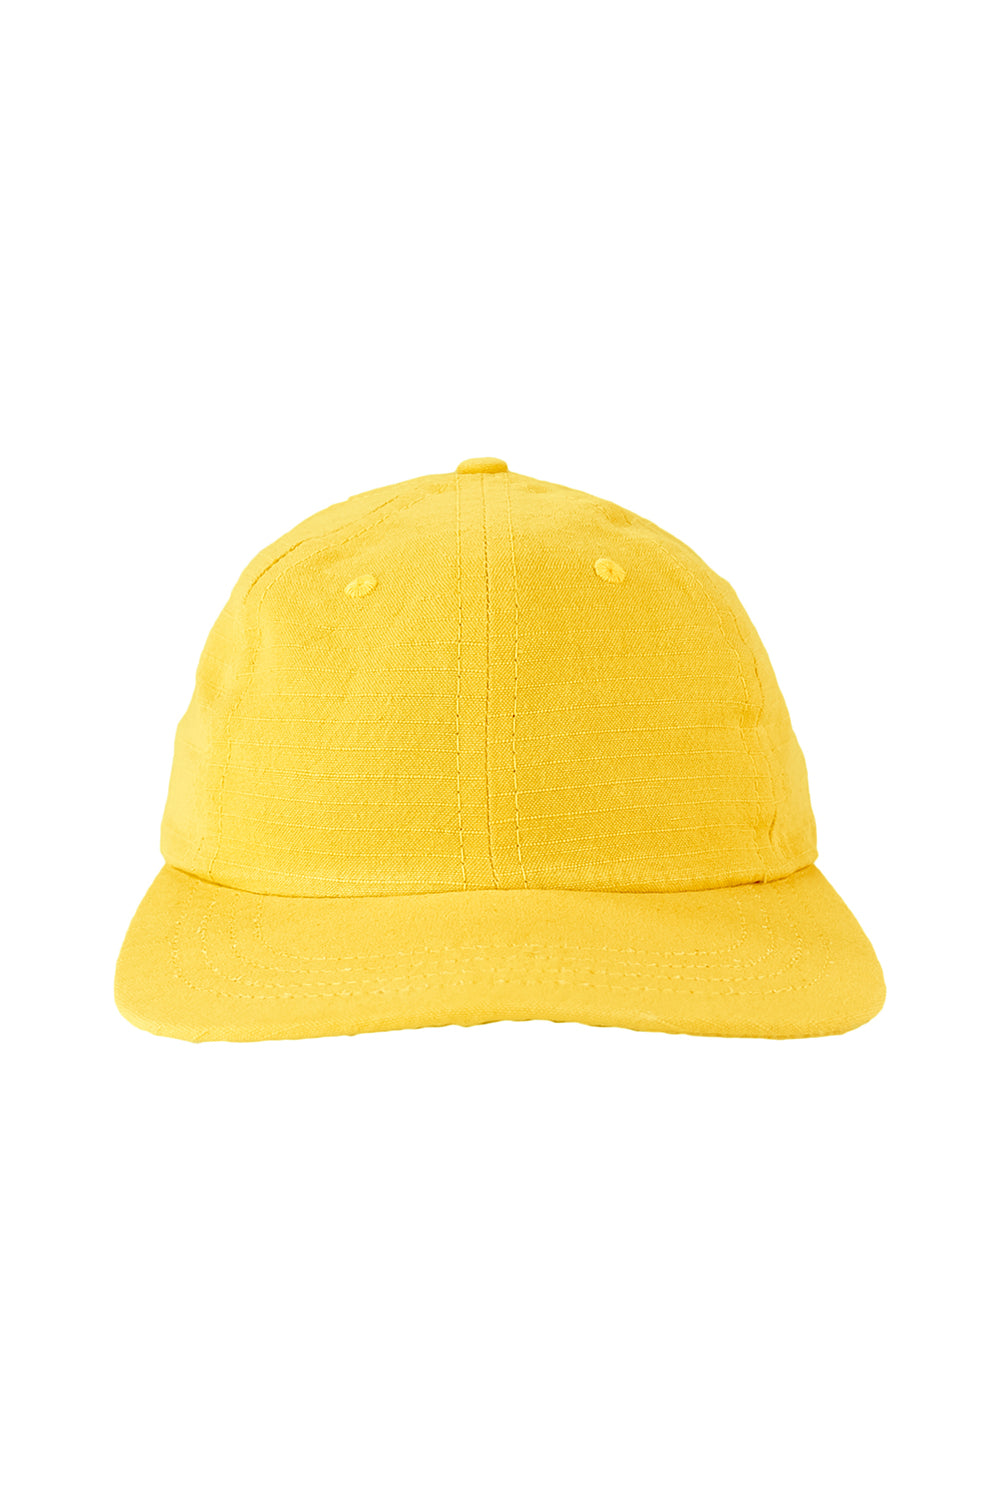 Chenga Ripstop Cap | Jungmaven Hemp Clothing & Accessories / Color: Sunshine Yellow